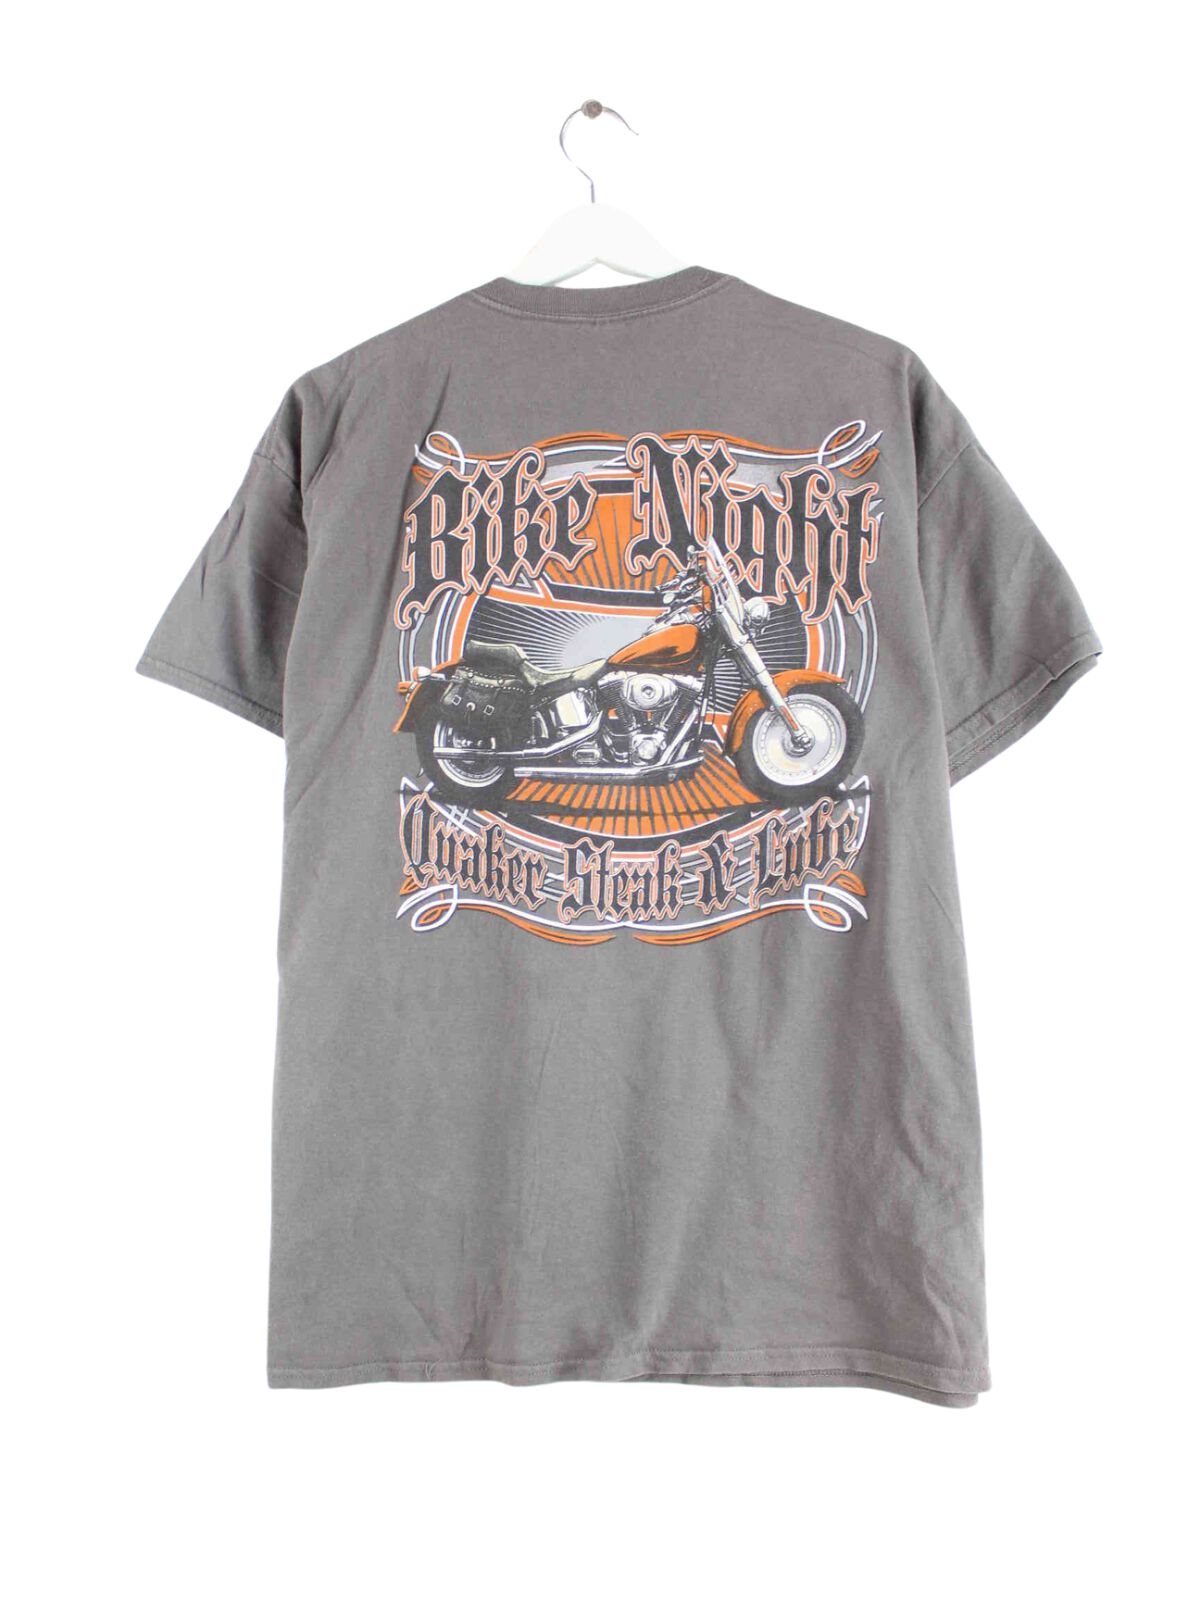 Gildan Biker The Lube Print T-Shirt Grau L (back image)